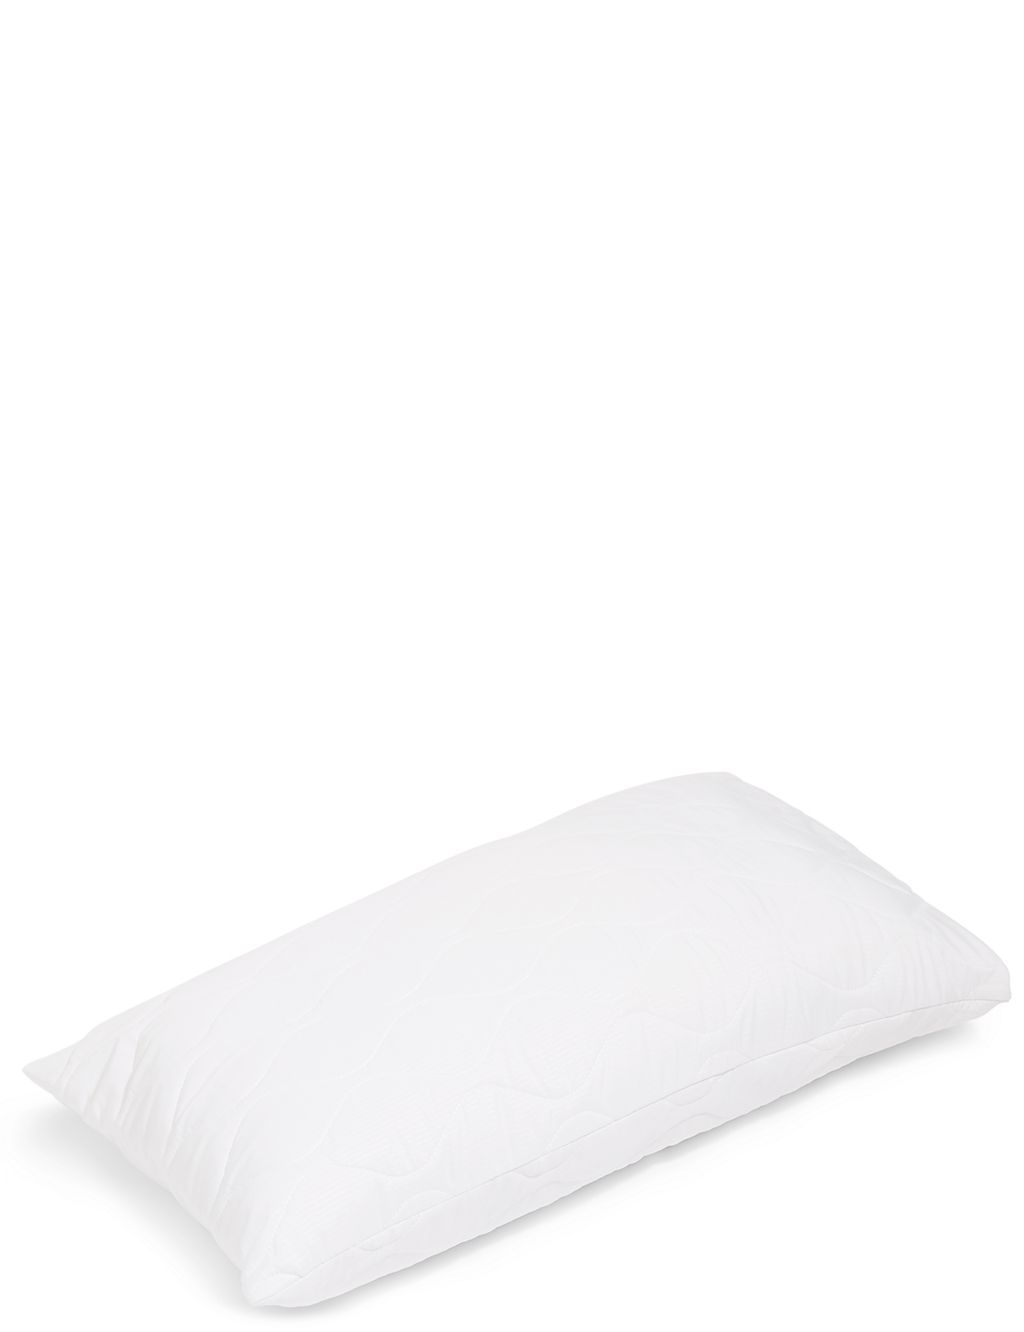 Bounceback Pillow Protector 1 of 3